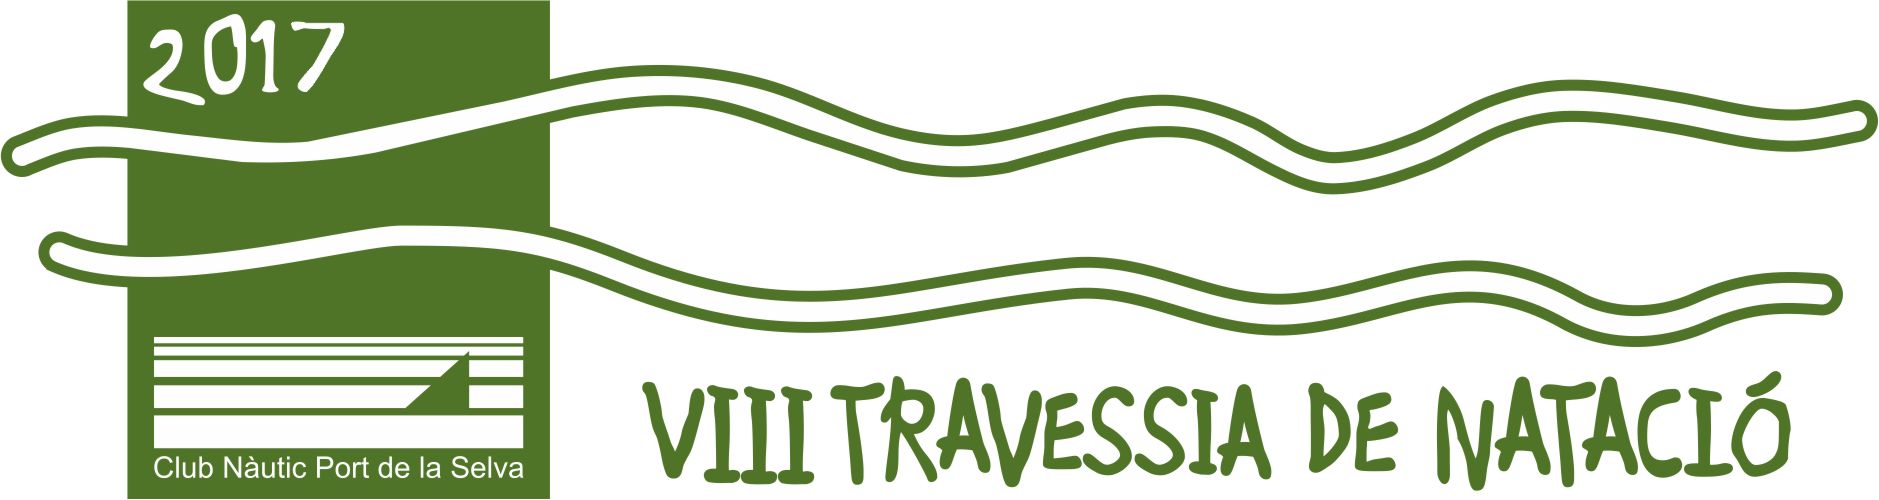 CNPS-VIII TRAVESSIA NATACIO-Logo